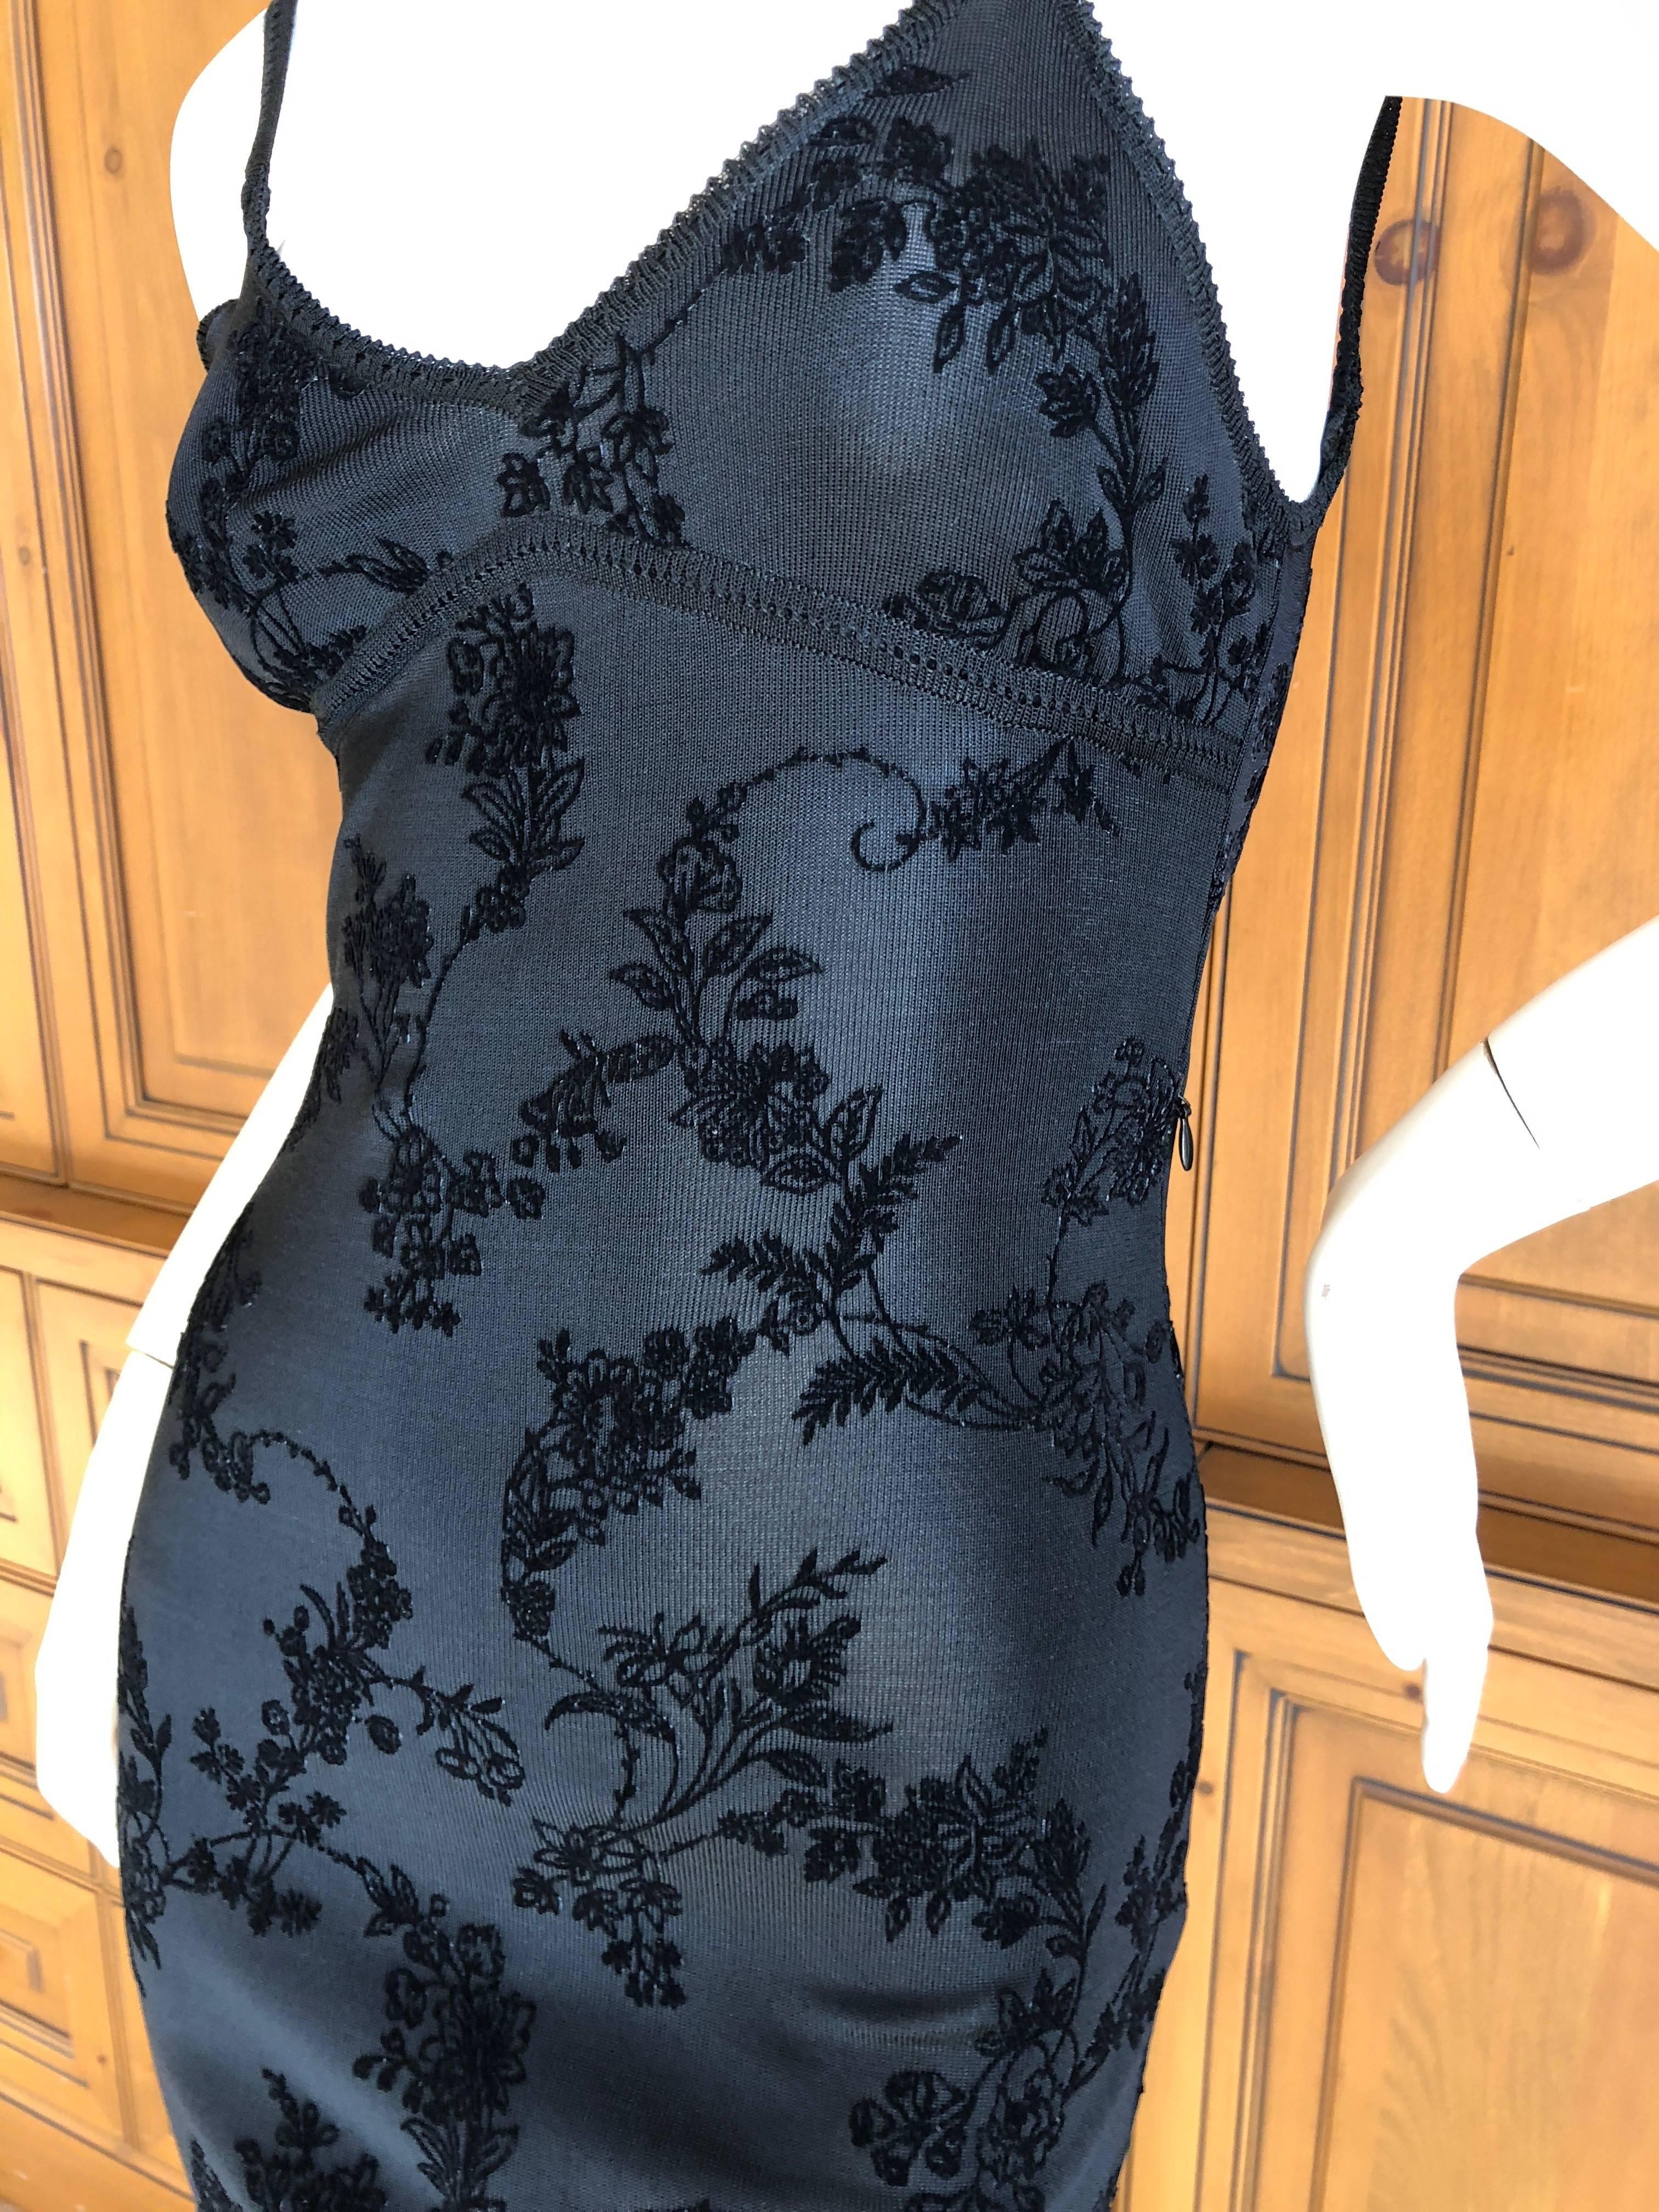 John Galliano 1998 SS 'Haute Bohemia' Collection Sheer Little Black Dress. 1